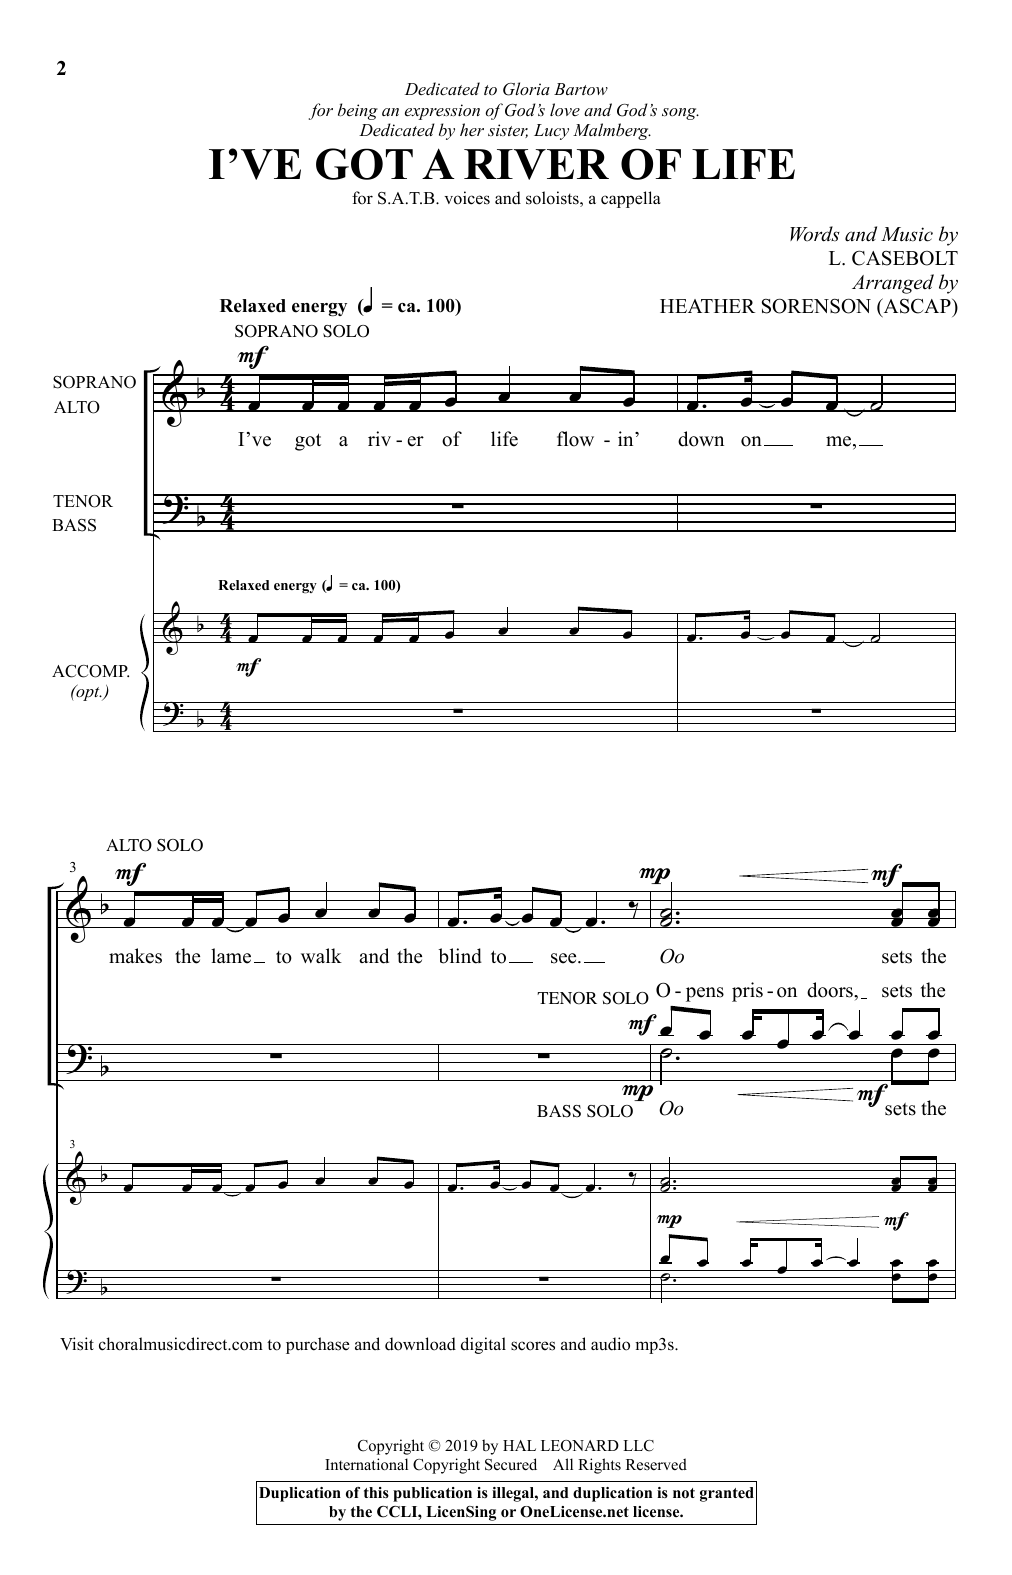 L. Casebolt I've Got A River Of Life (arr. Heather Sorenson) Sheet Music Notes & Chords for SATB Choir - Download or Print PDF